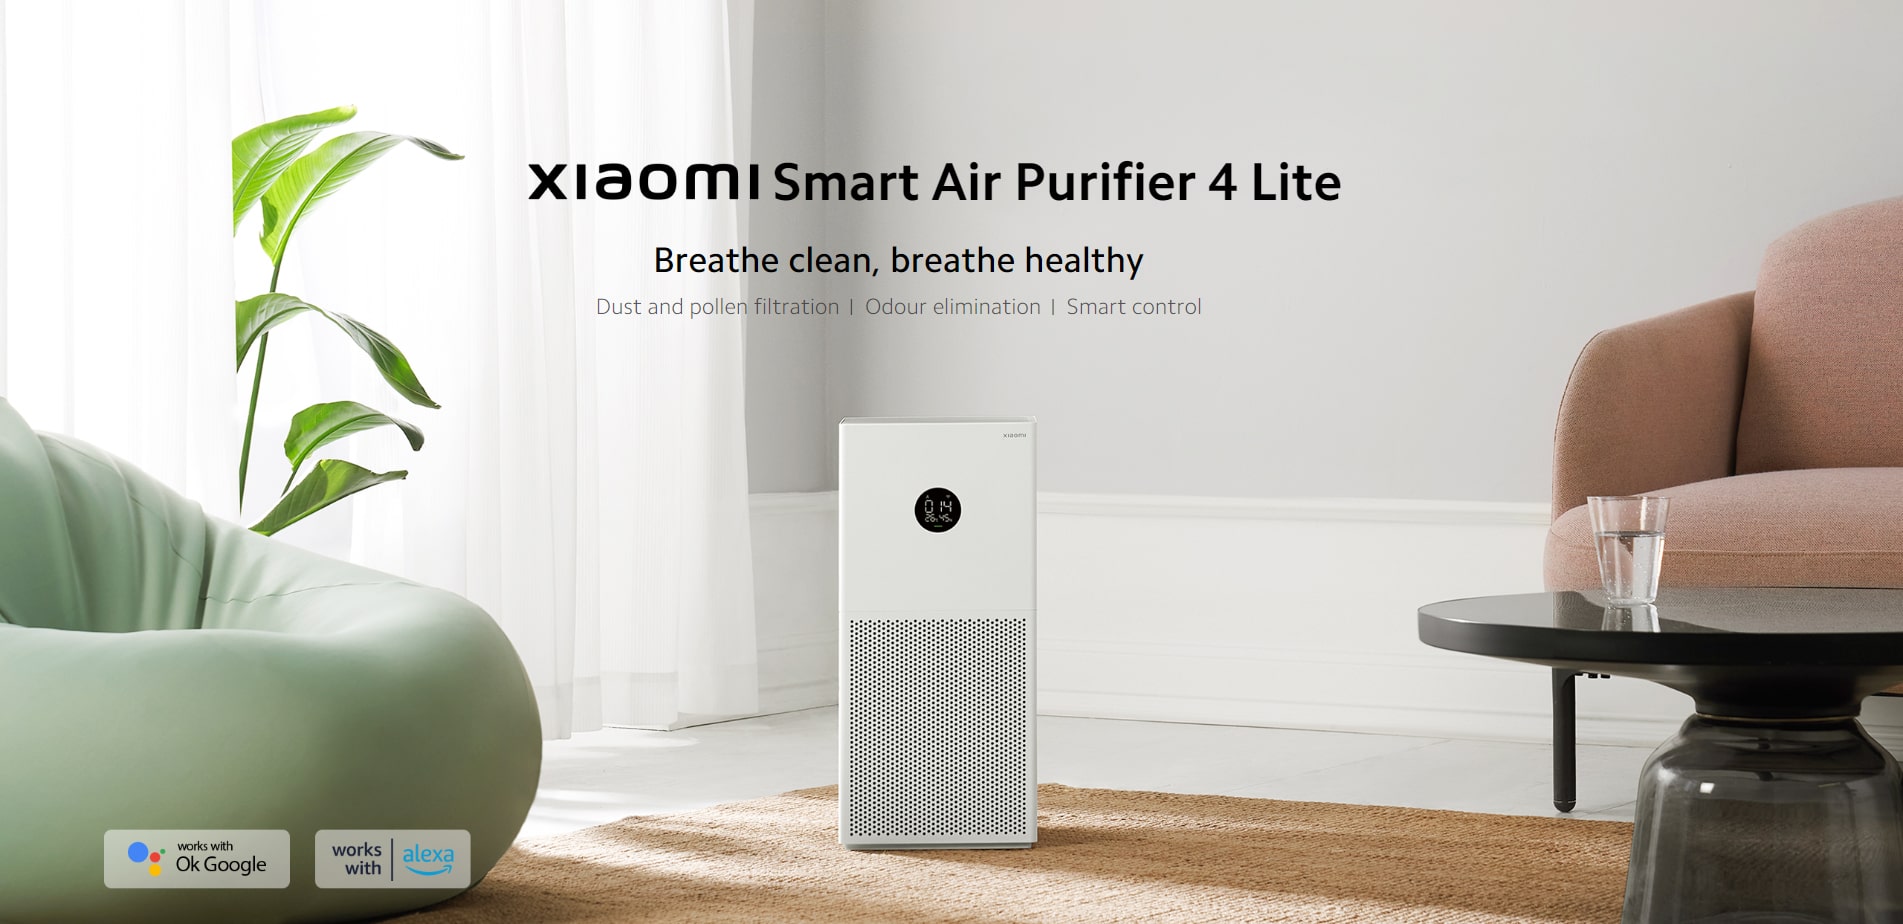 دستگاه تصفیه هوا شیائومی مدل Xiaomi Smart Air Purifier 4 Lite Xiaomi Smart Air Purifier 4 Lite